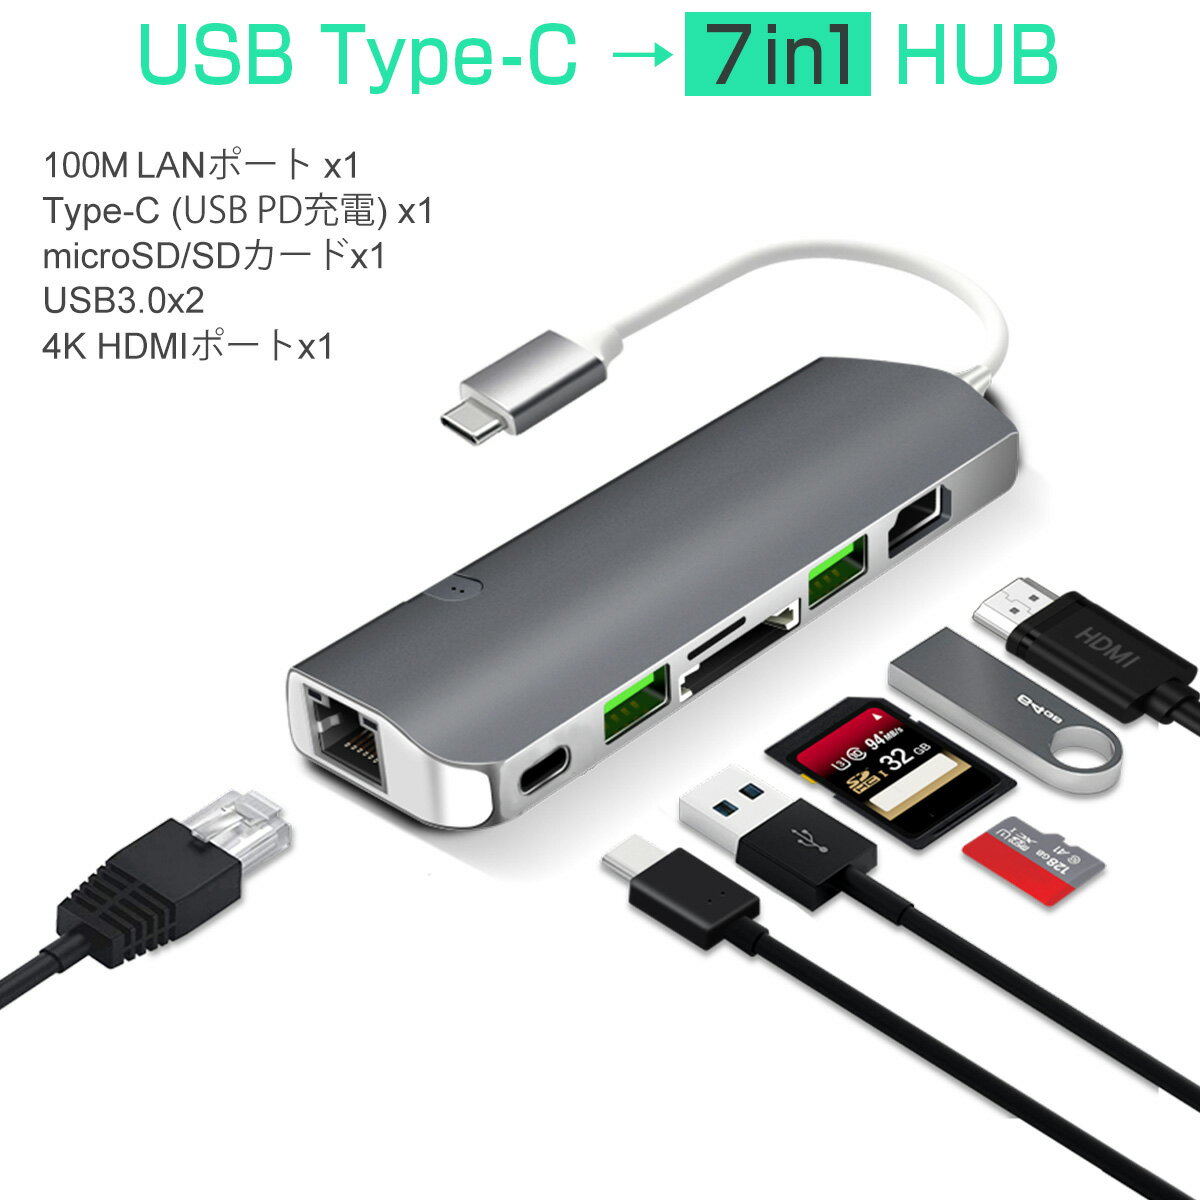 USB Type-C ハブ 7in1 USB3.0x2 4K HDMI 有線LAN PD充電 microSD SDスロット 拡張 変換 スペースグレイ 軽量 Galaxy MacBook ChromeBook VAIO Mac Windows対応 3ヶ月保証 SDL